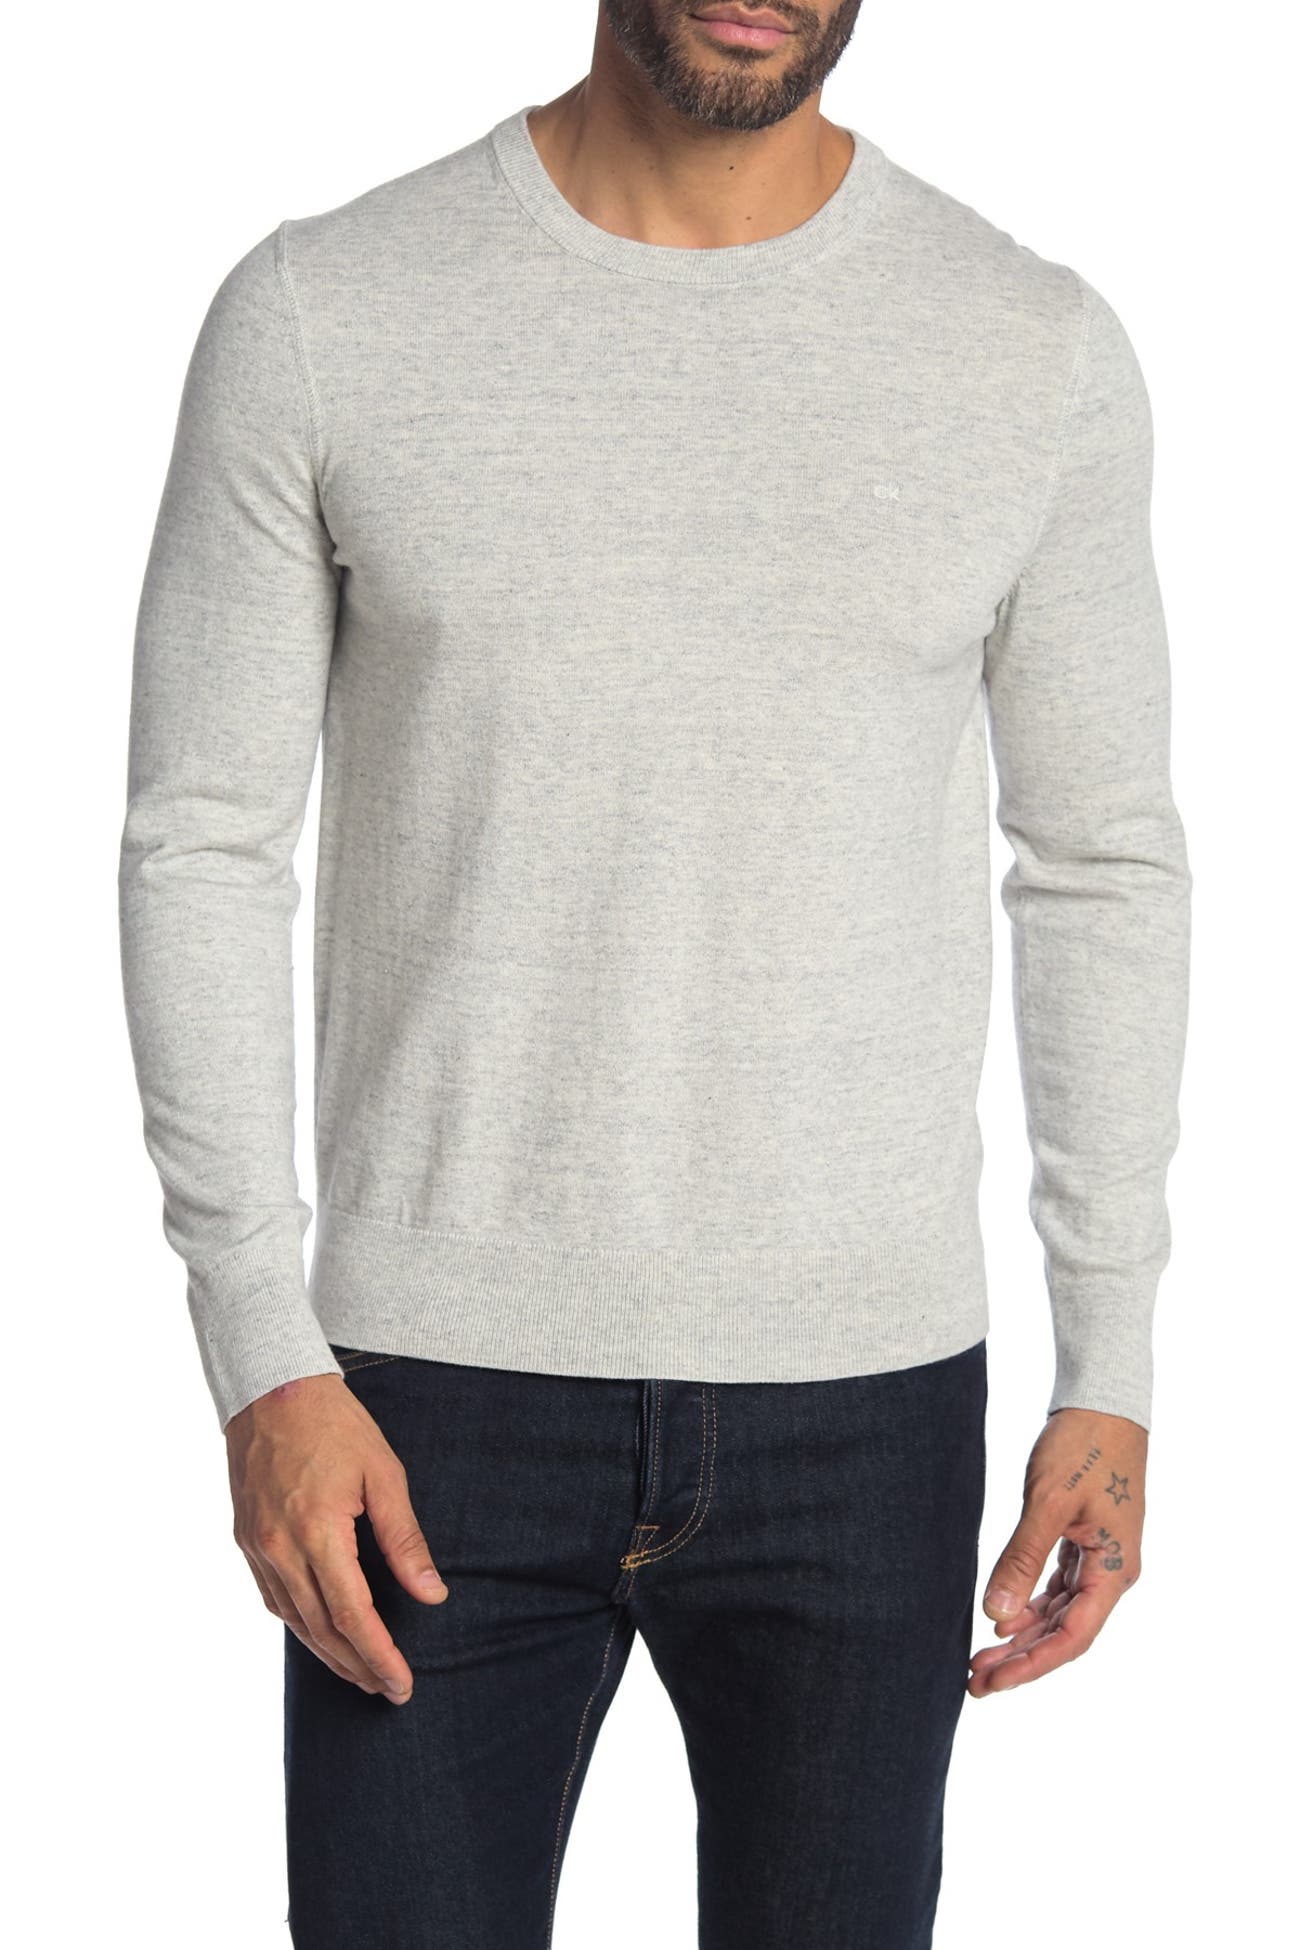 Calvin Klein | Heathered Crew Neck Pullover Sweater | Nordstrom Rack